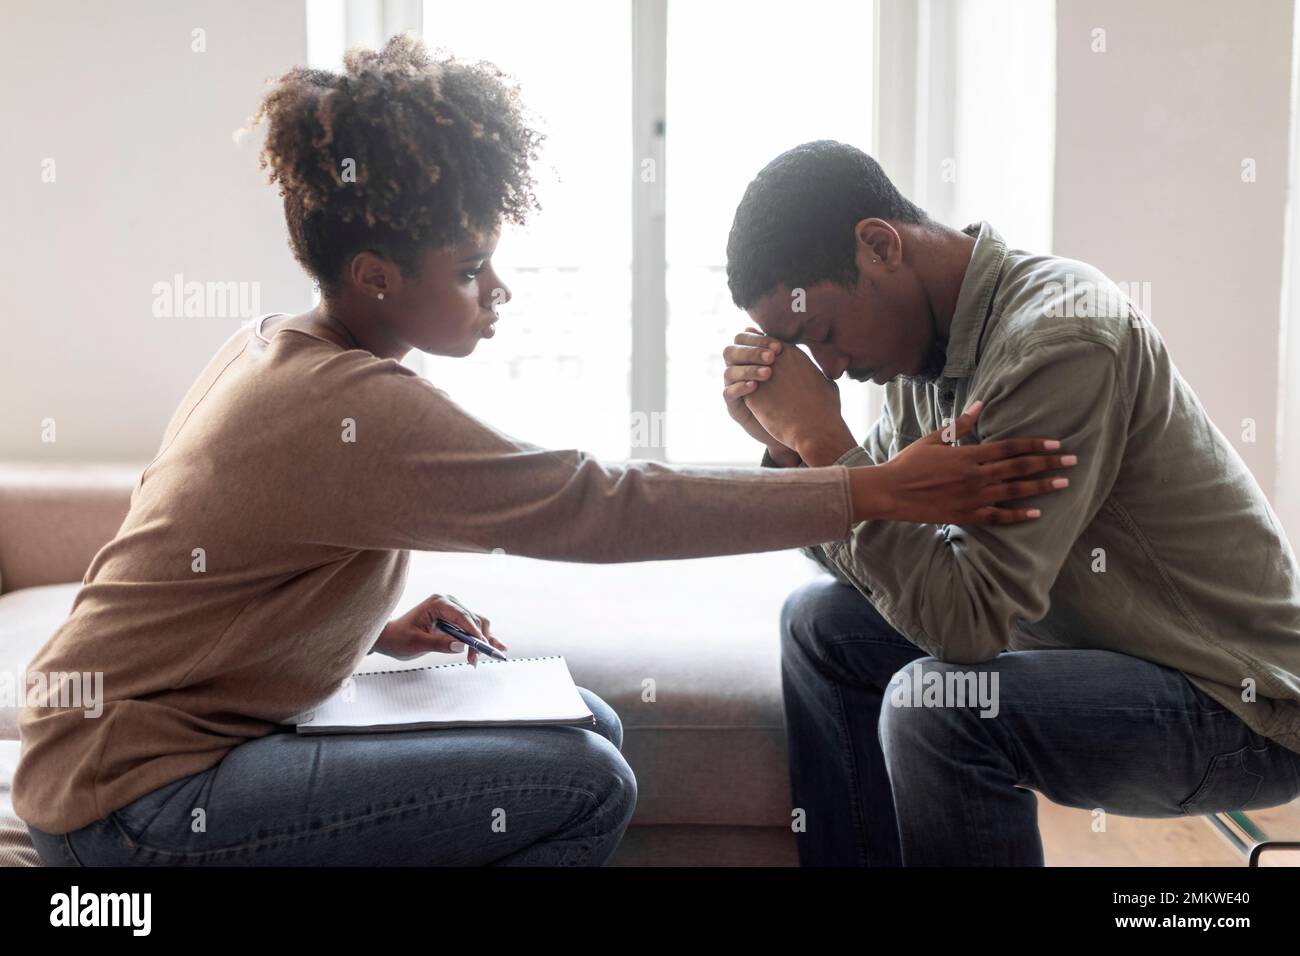 Black woman psychologist comforting upset man patient, side view Stock Photo